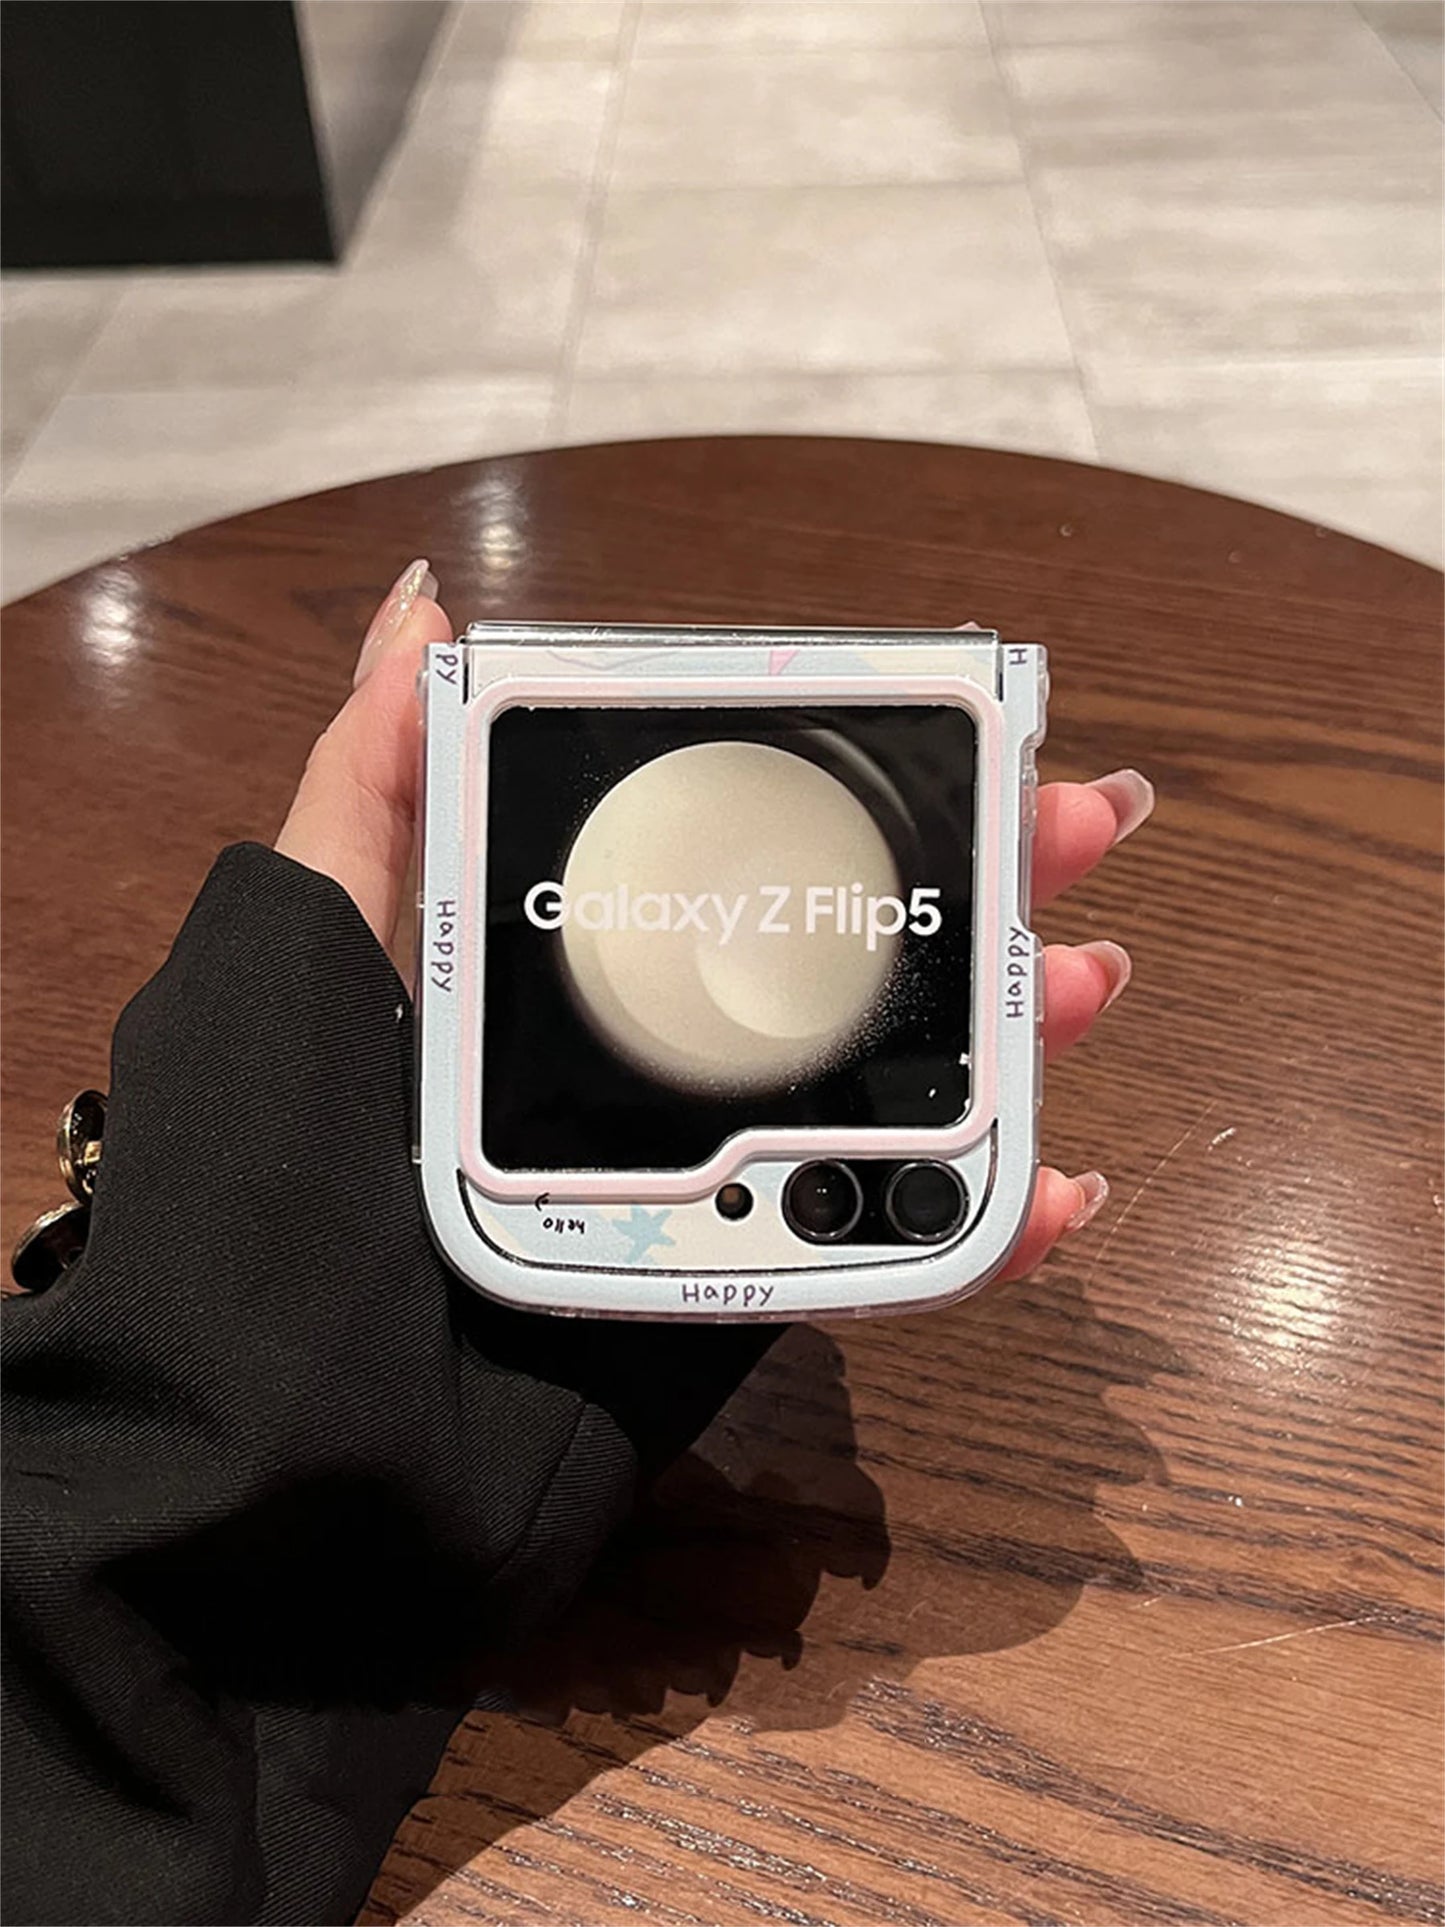 Cute Case for Galaxy Z Flip Cover